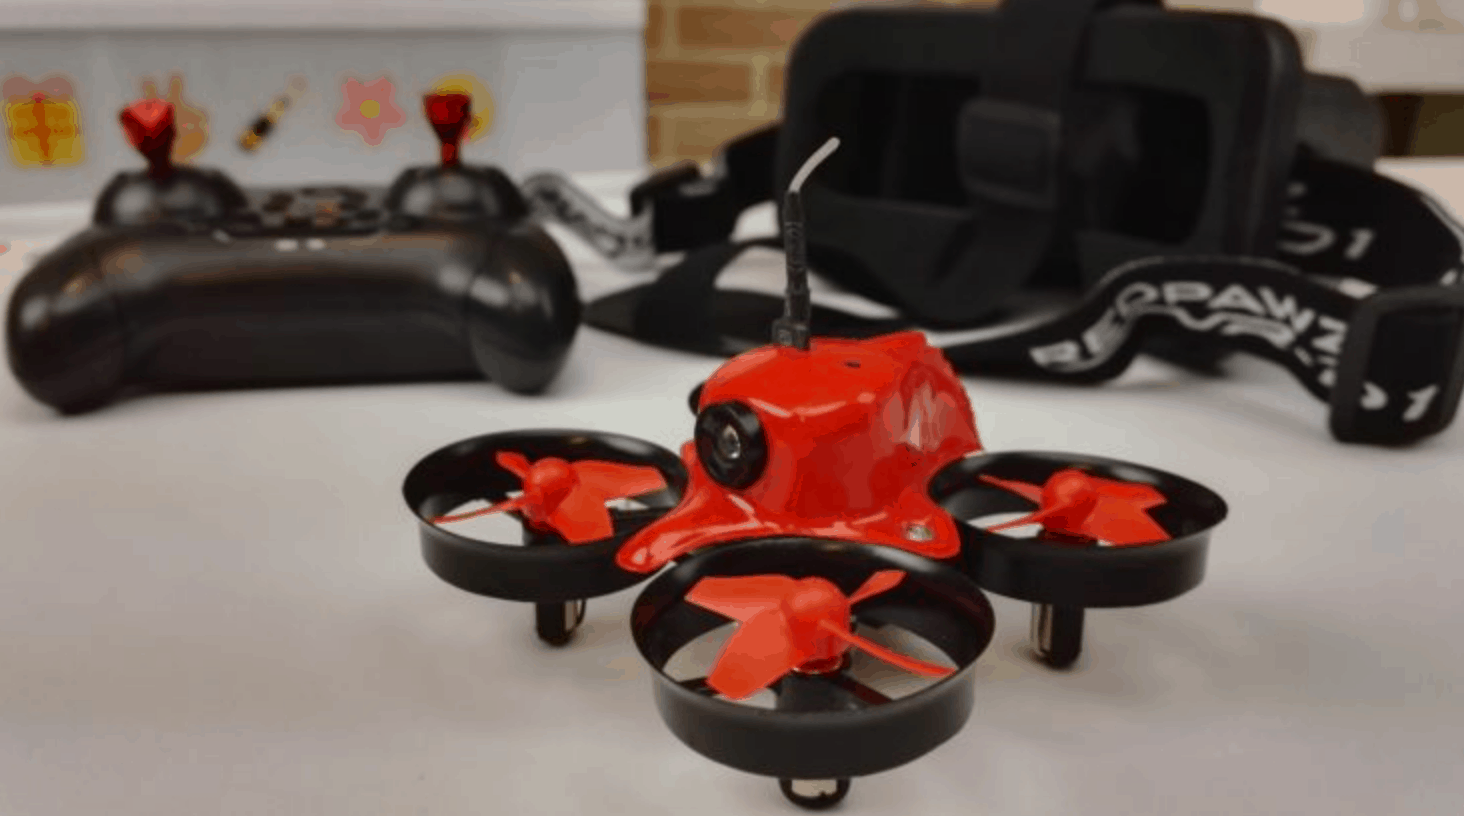 redpawz r011 drone